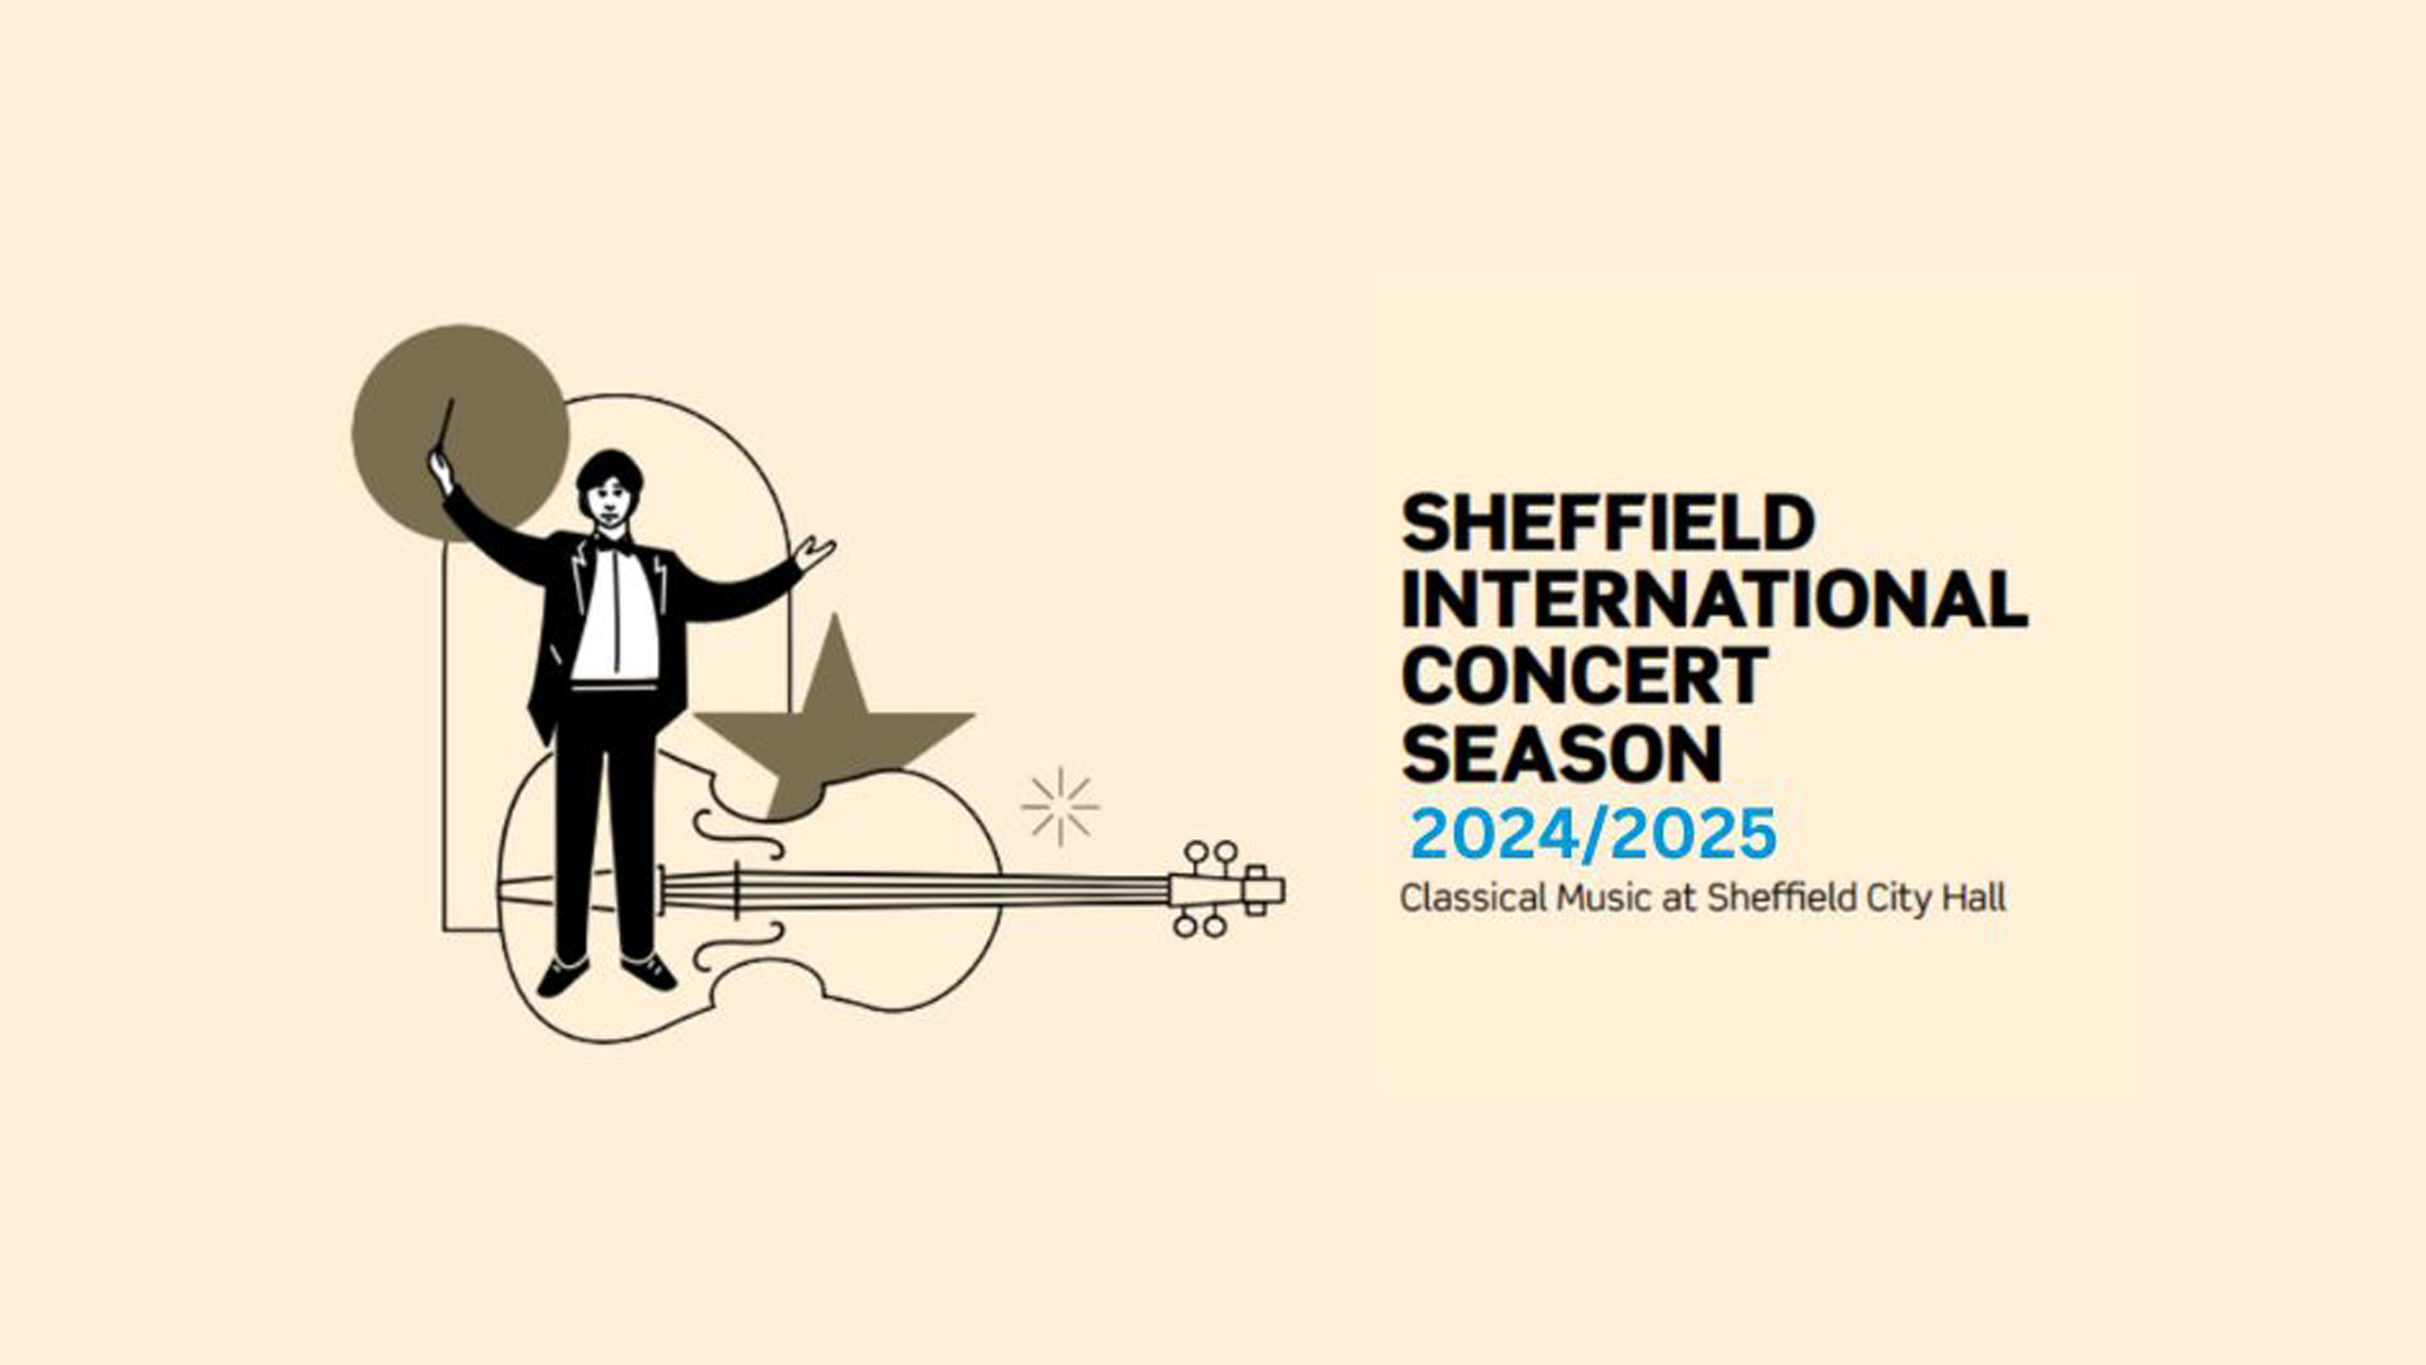 Sheffield International Concert Season